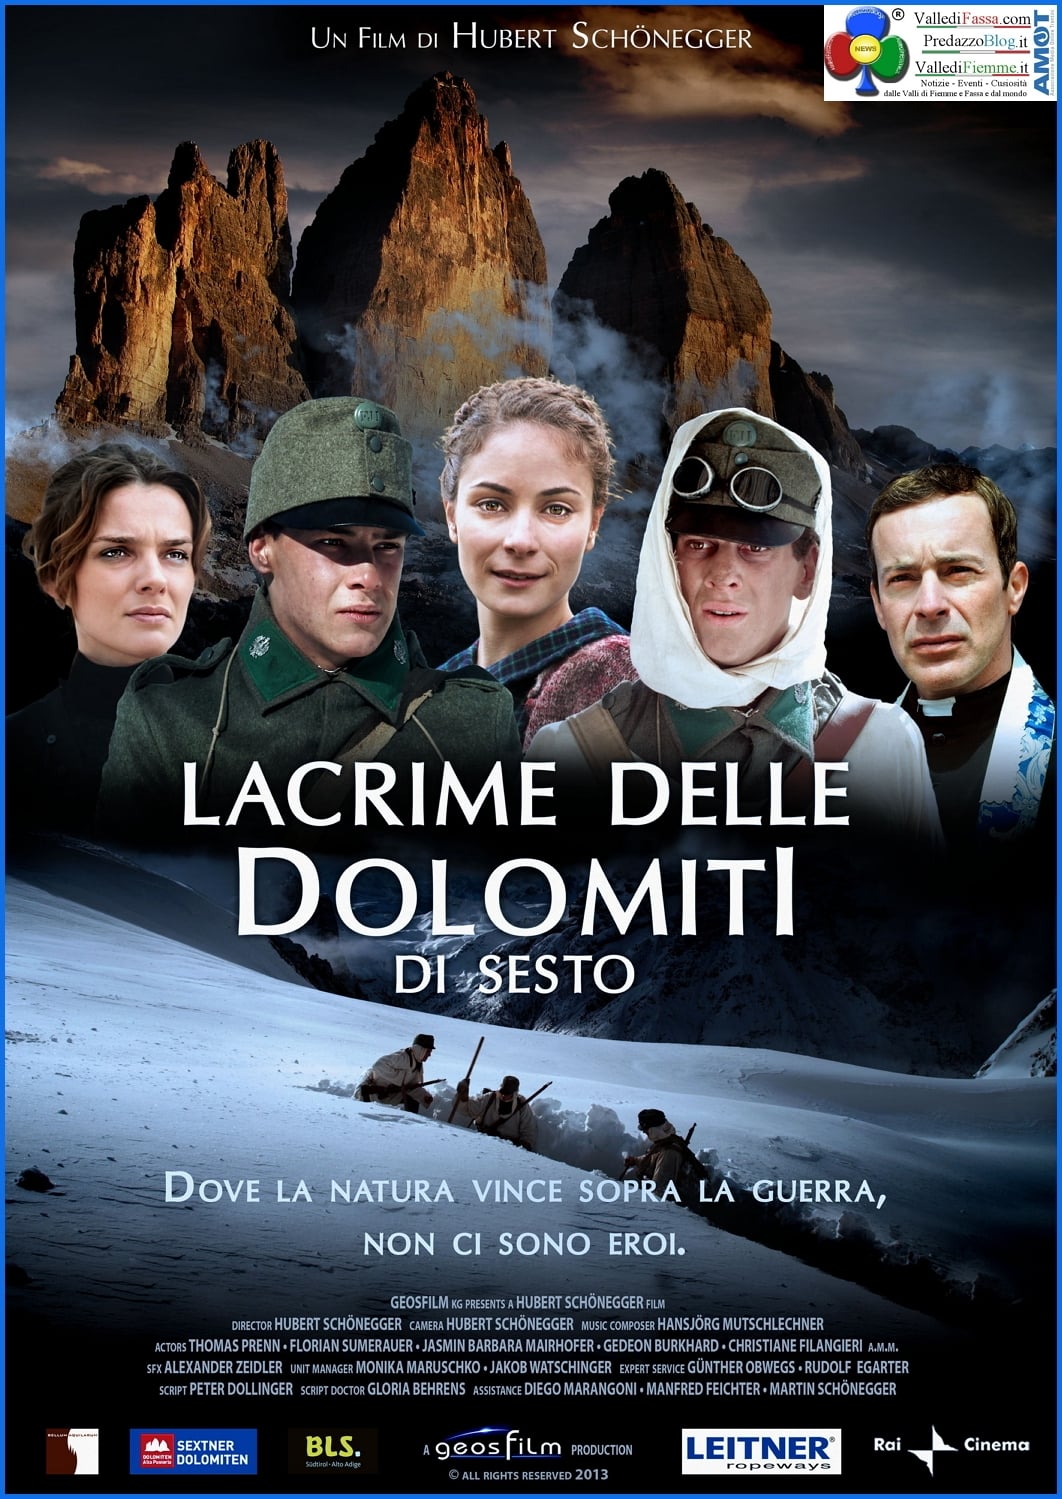 Tears of the Sexten Dolomites